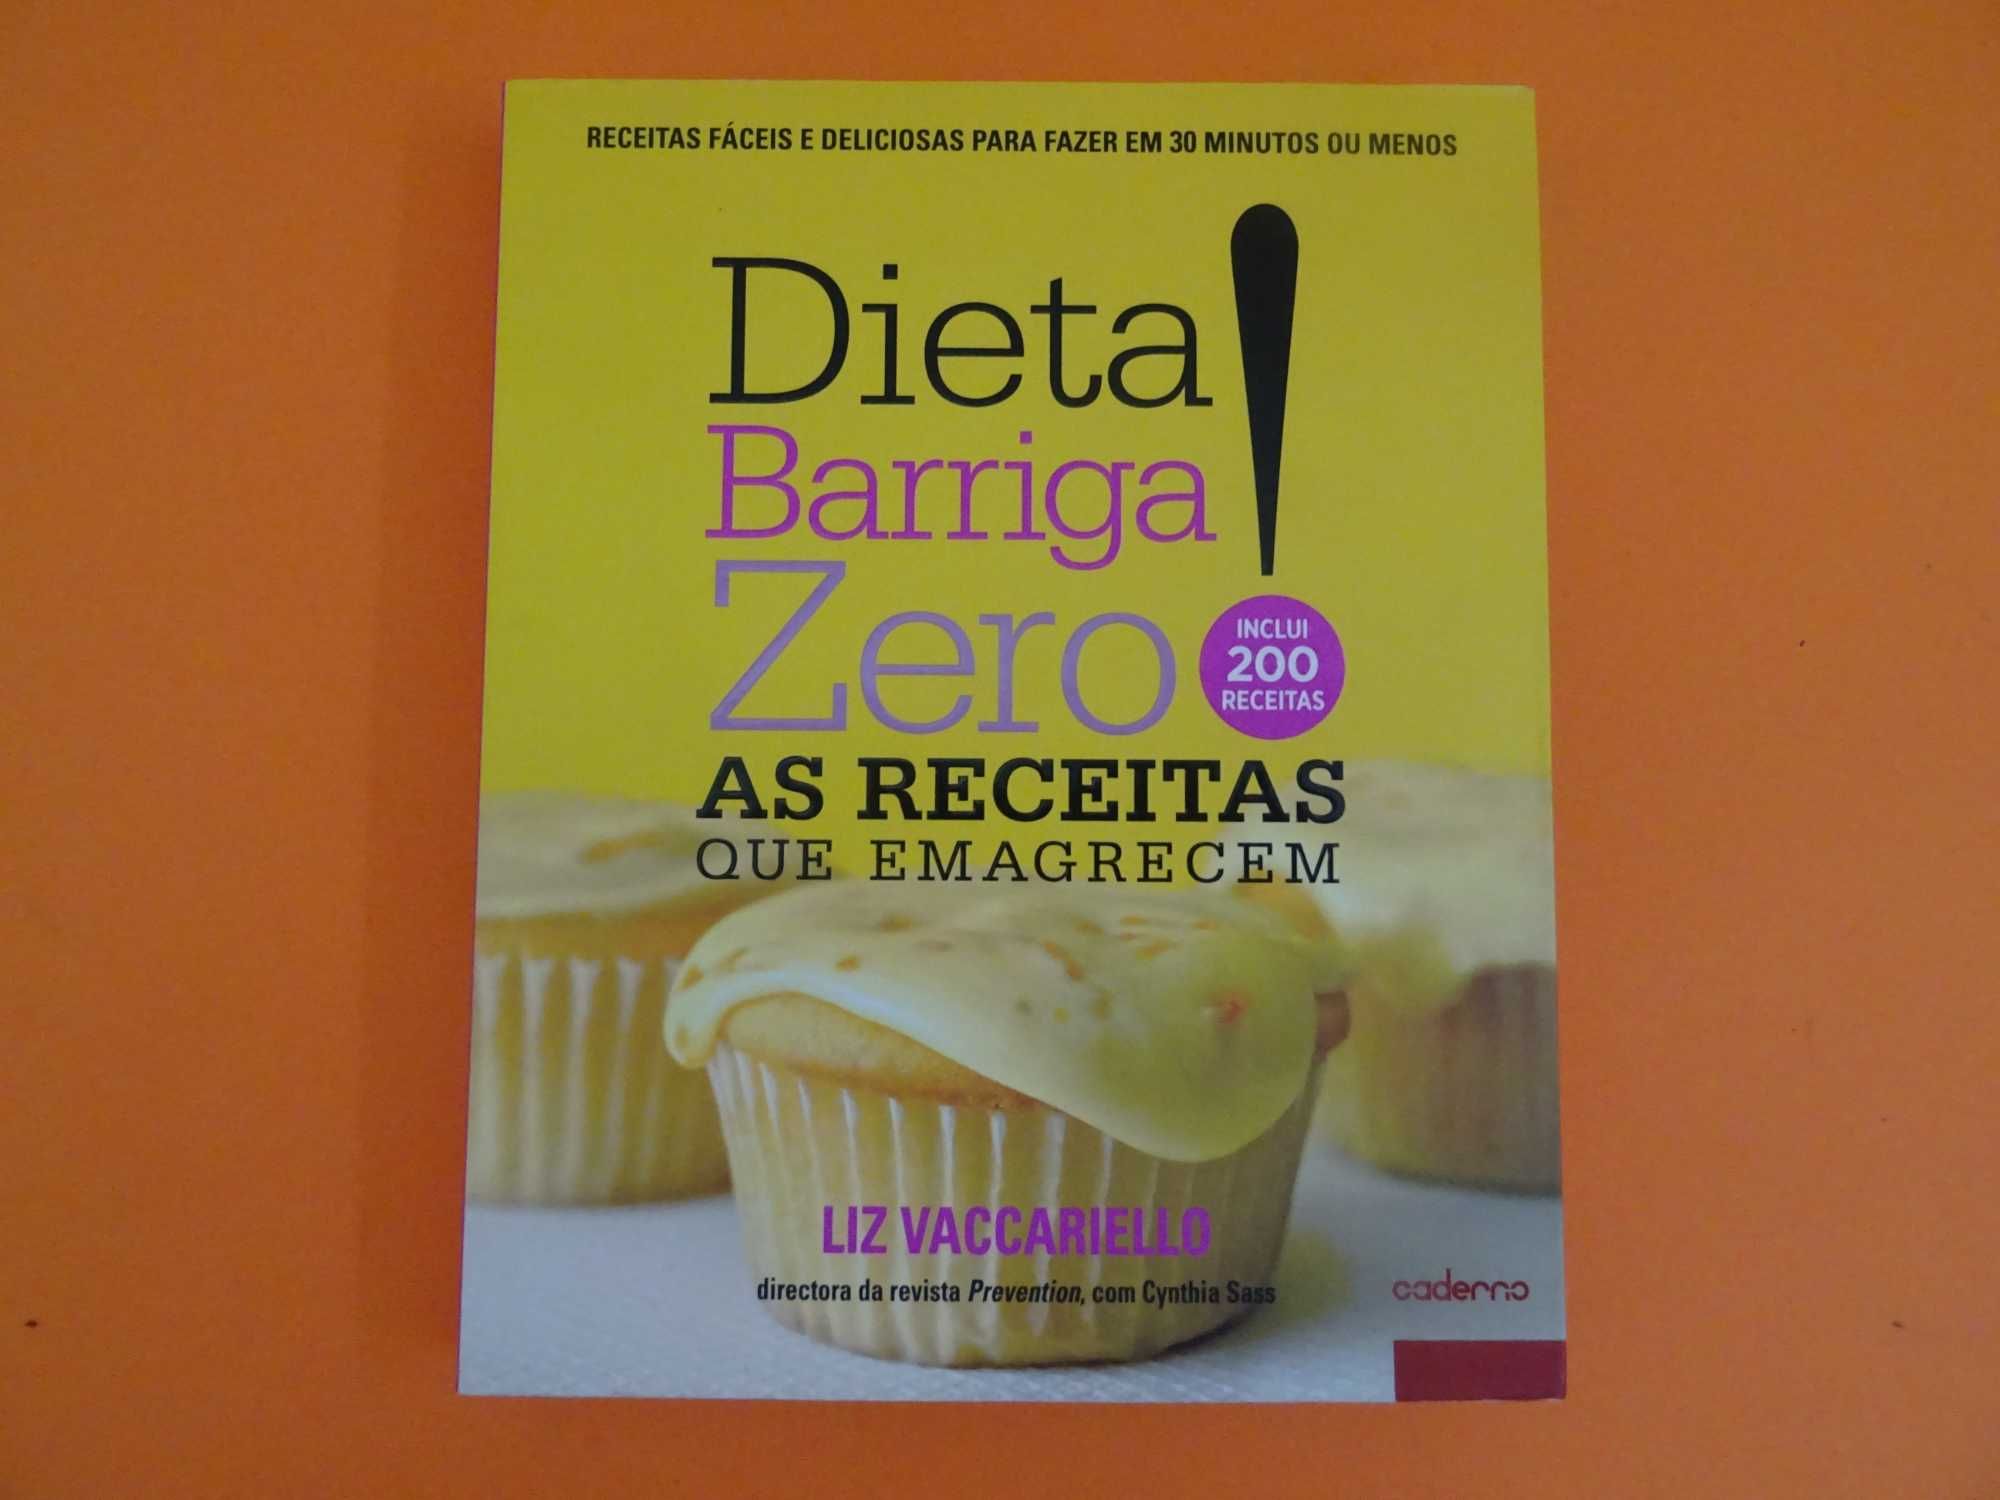 Dieta Barriga Zero - Liz Vaccariello -Receitas que emagrecem